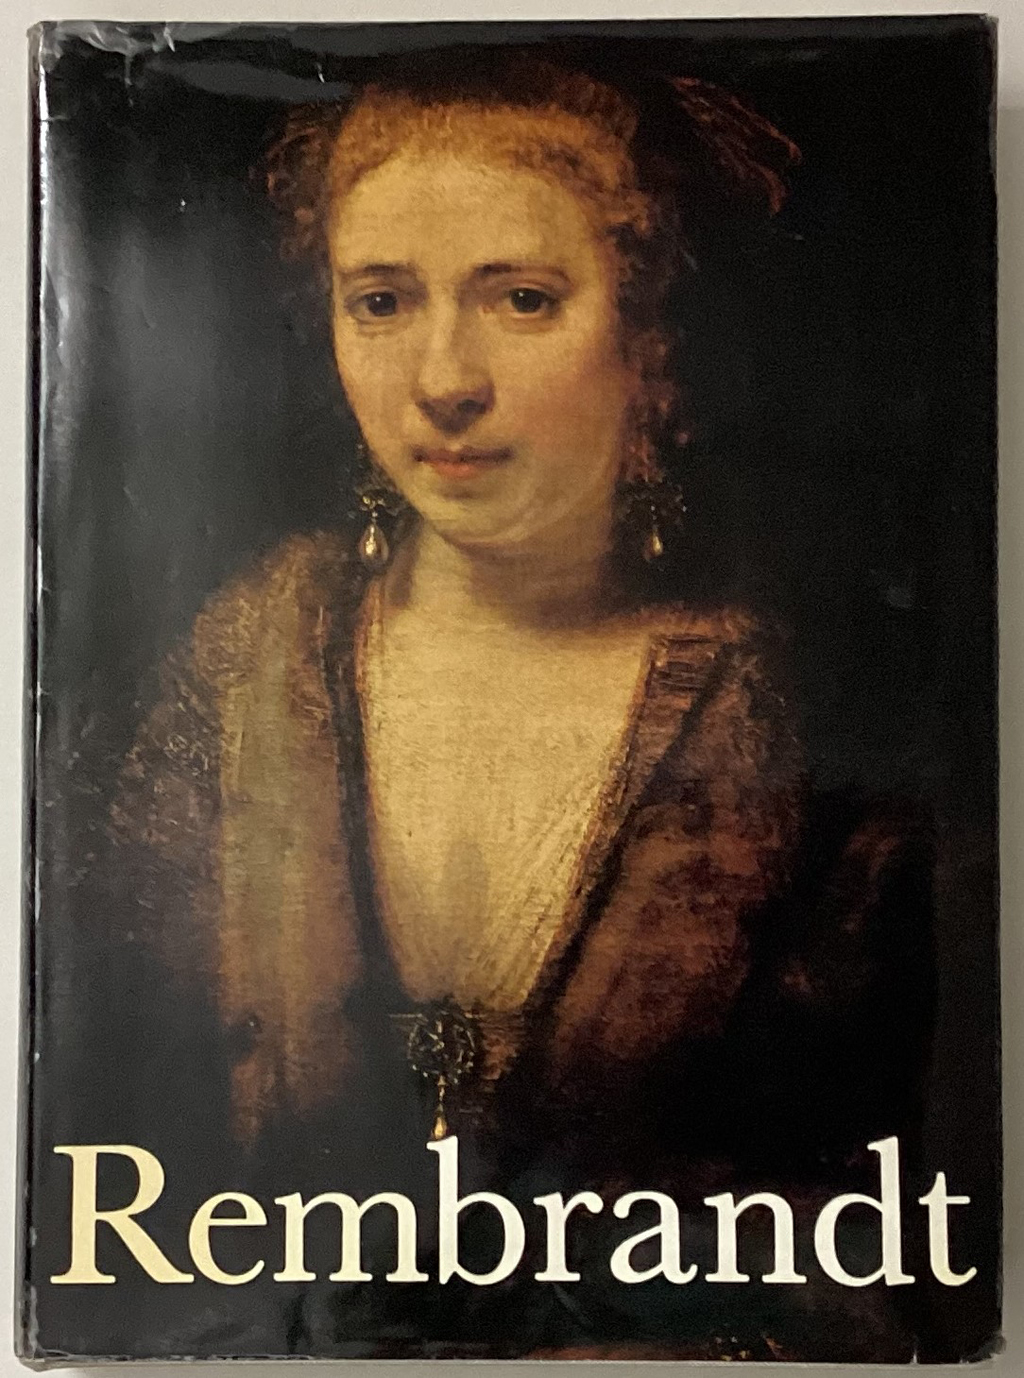 KerrisdaleGallery.com - Stock ID#GER168bv - Rembrandt Gemaelde, das Gesamtwerk by Horst Gerson (Rembrandt Paintings, the Complete Works) - Hardcover 1968 German Edition